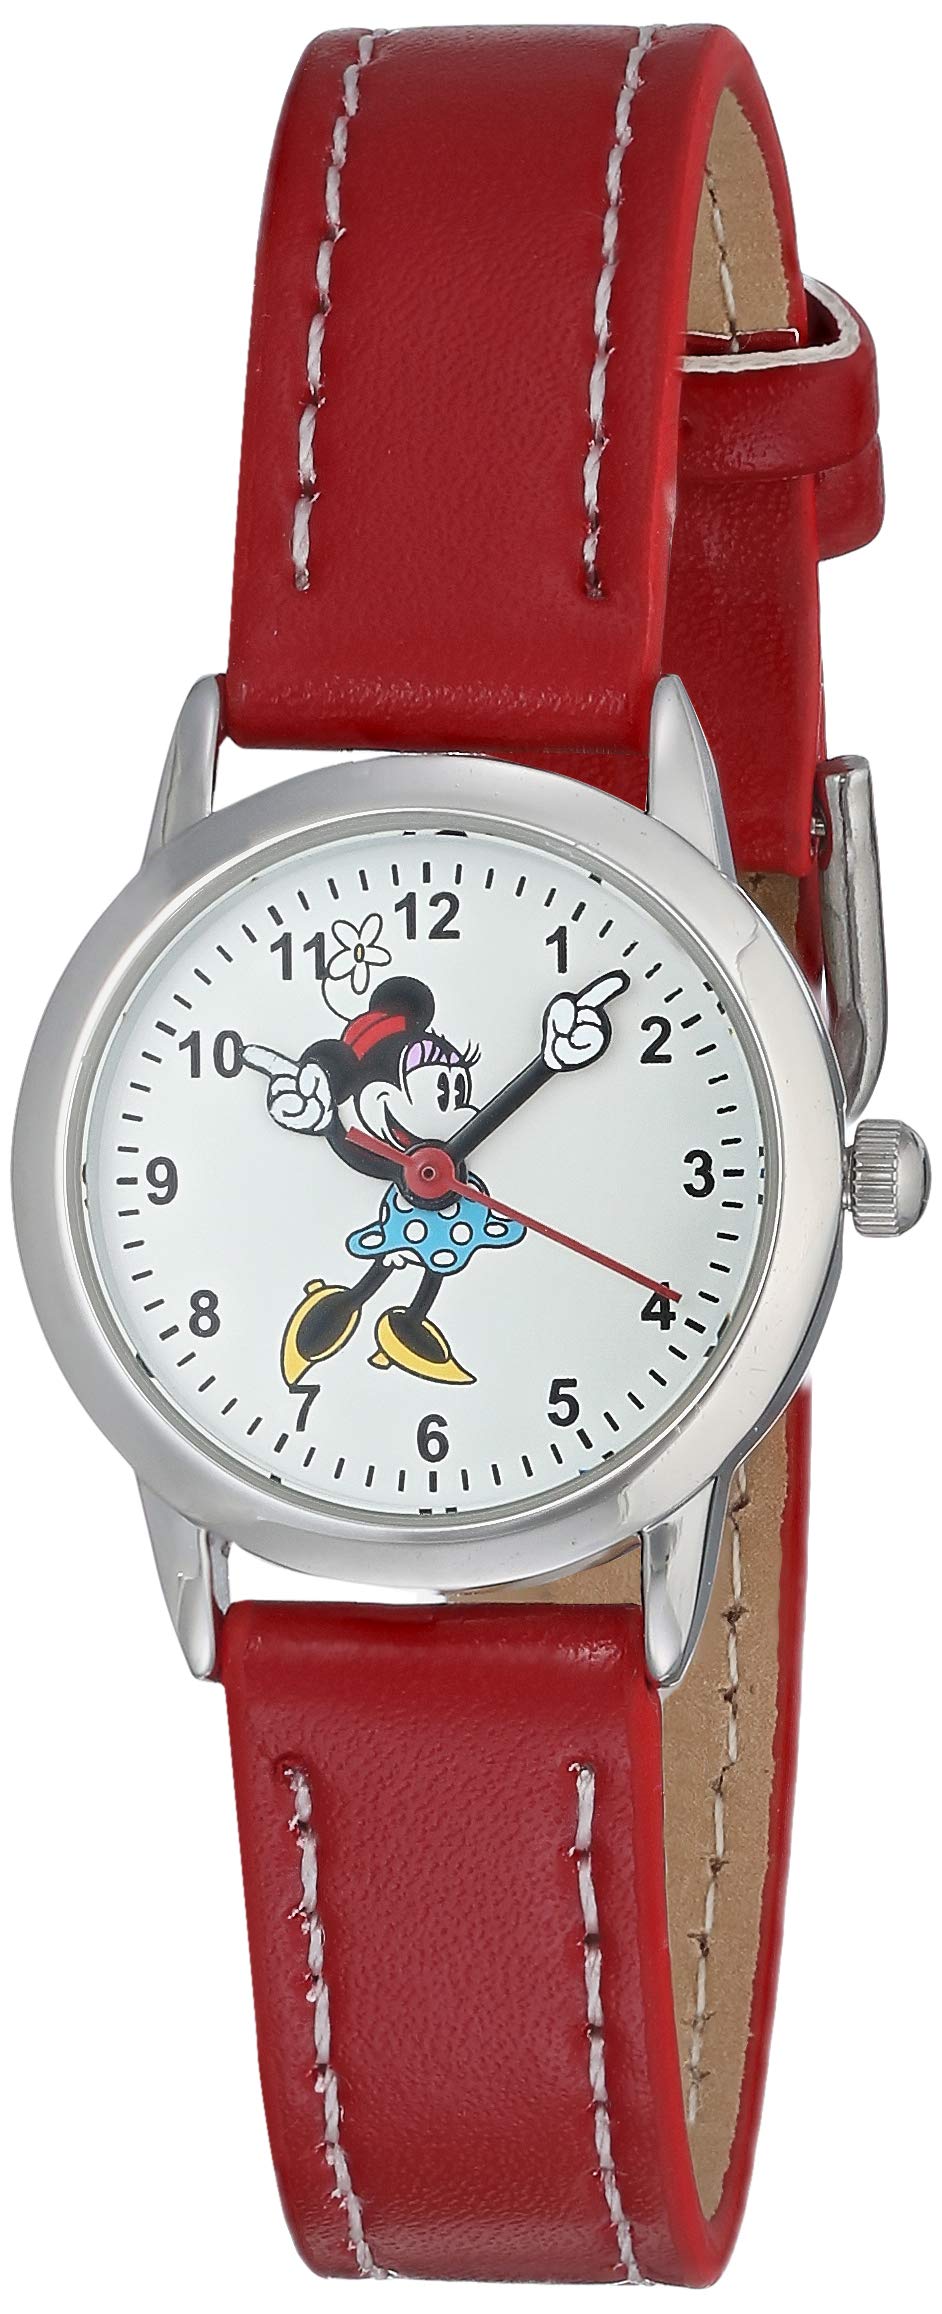 Accutime Kids Disney Mickey Mouse Analog Fashion Watch for Girls & Women